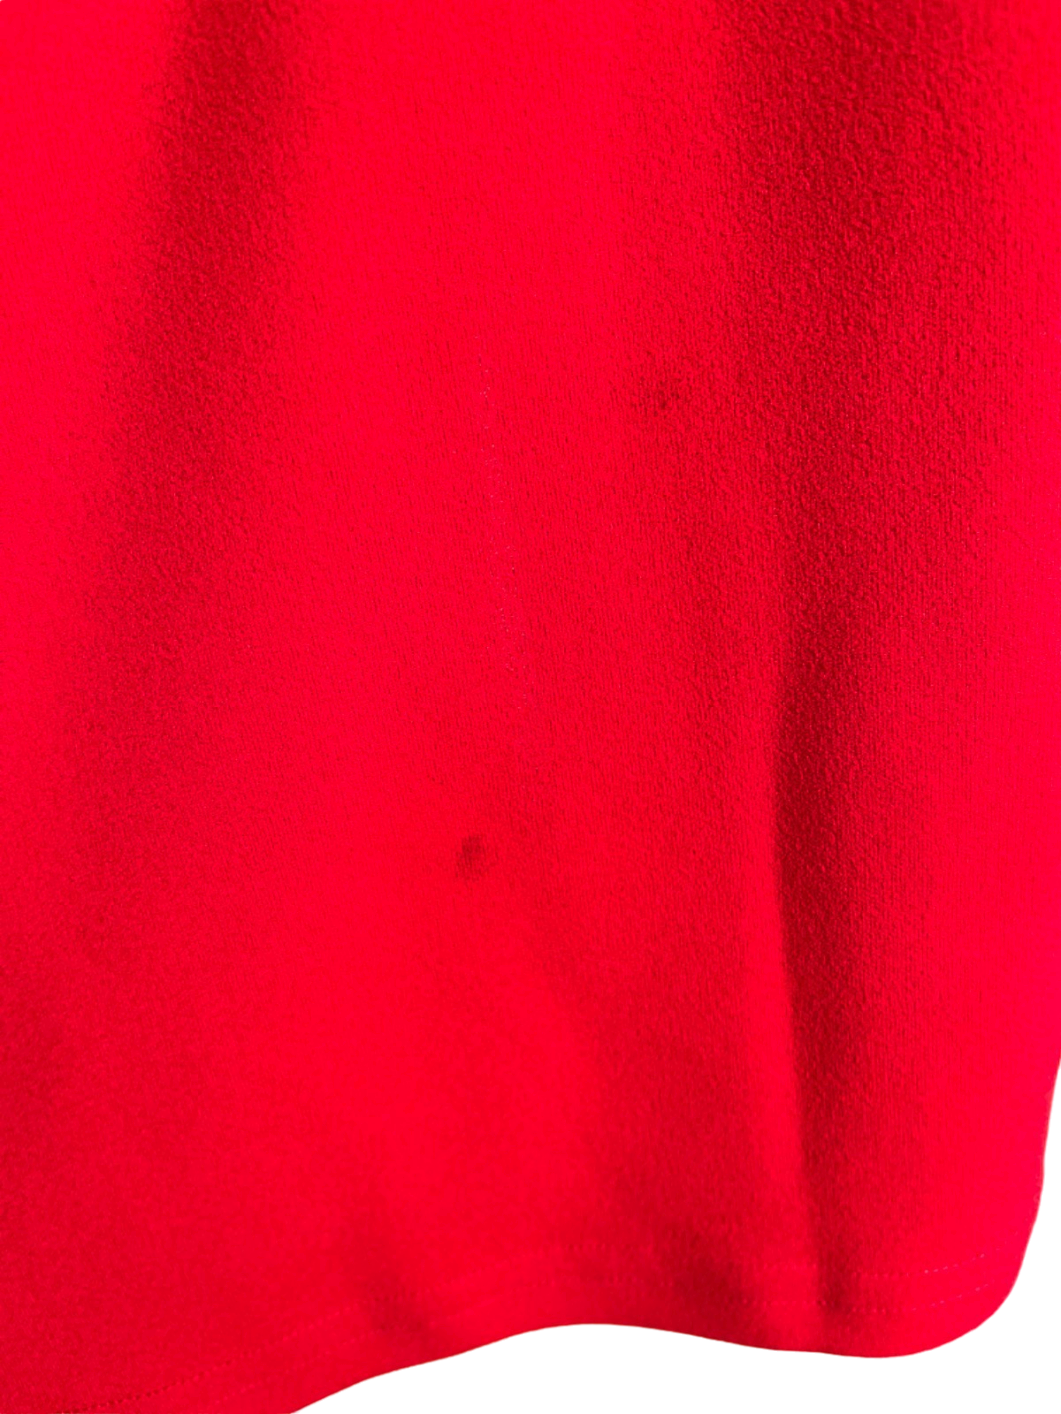 Coast Red Asymmetric Ruffle Dress UK 10